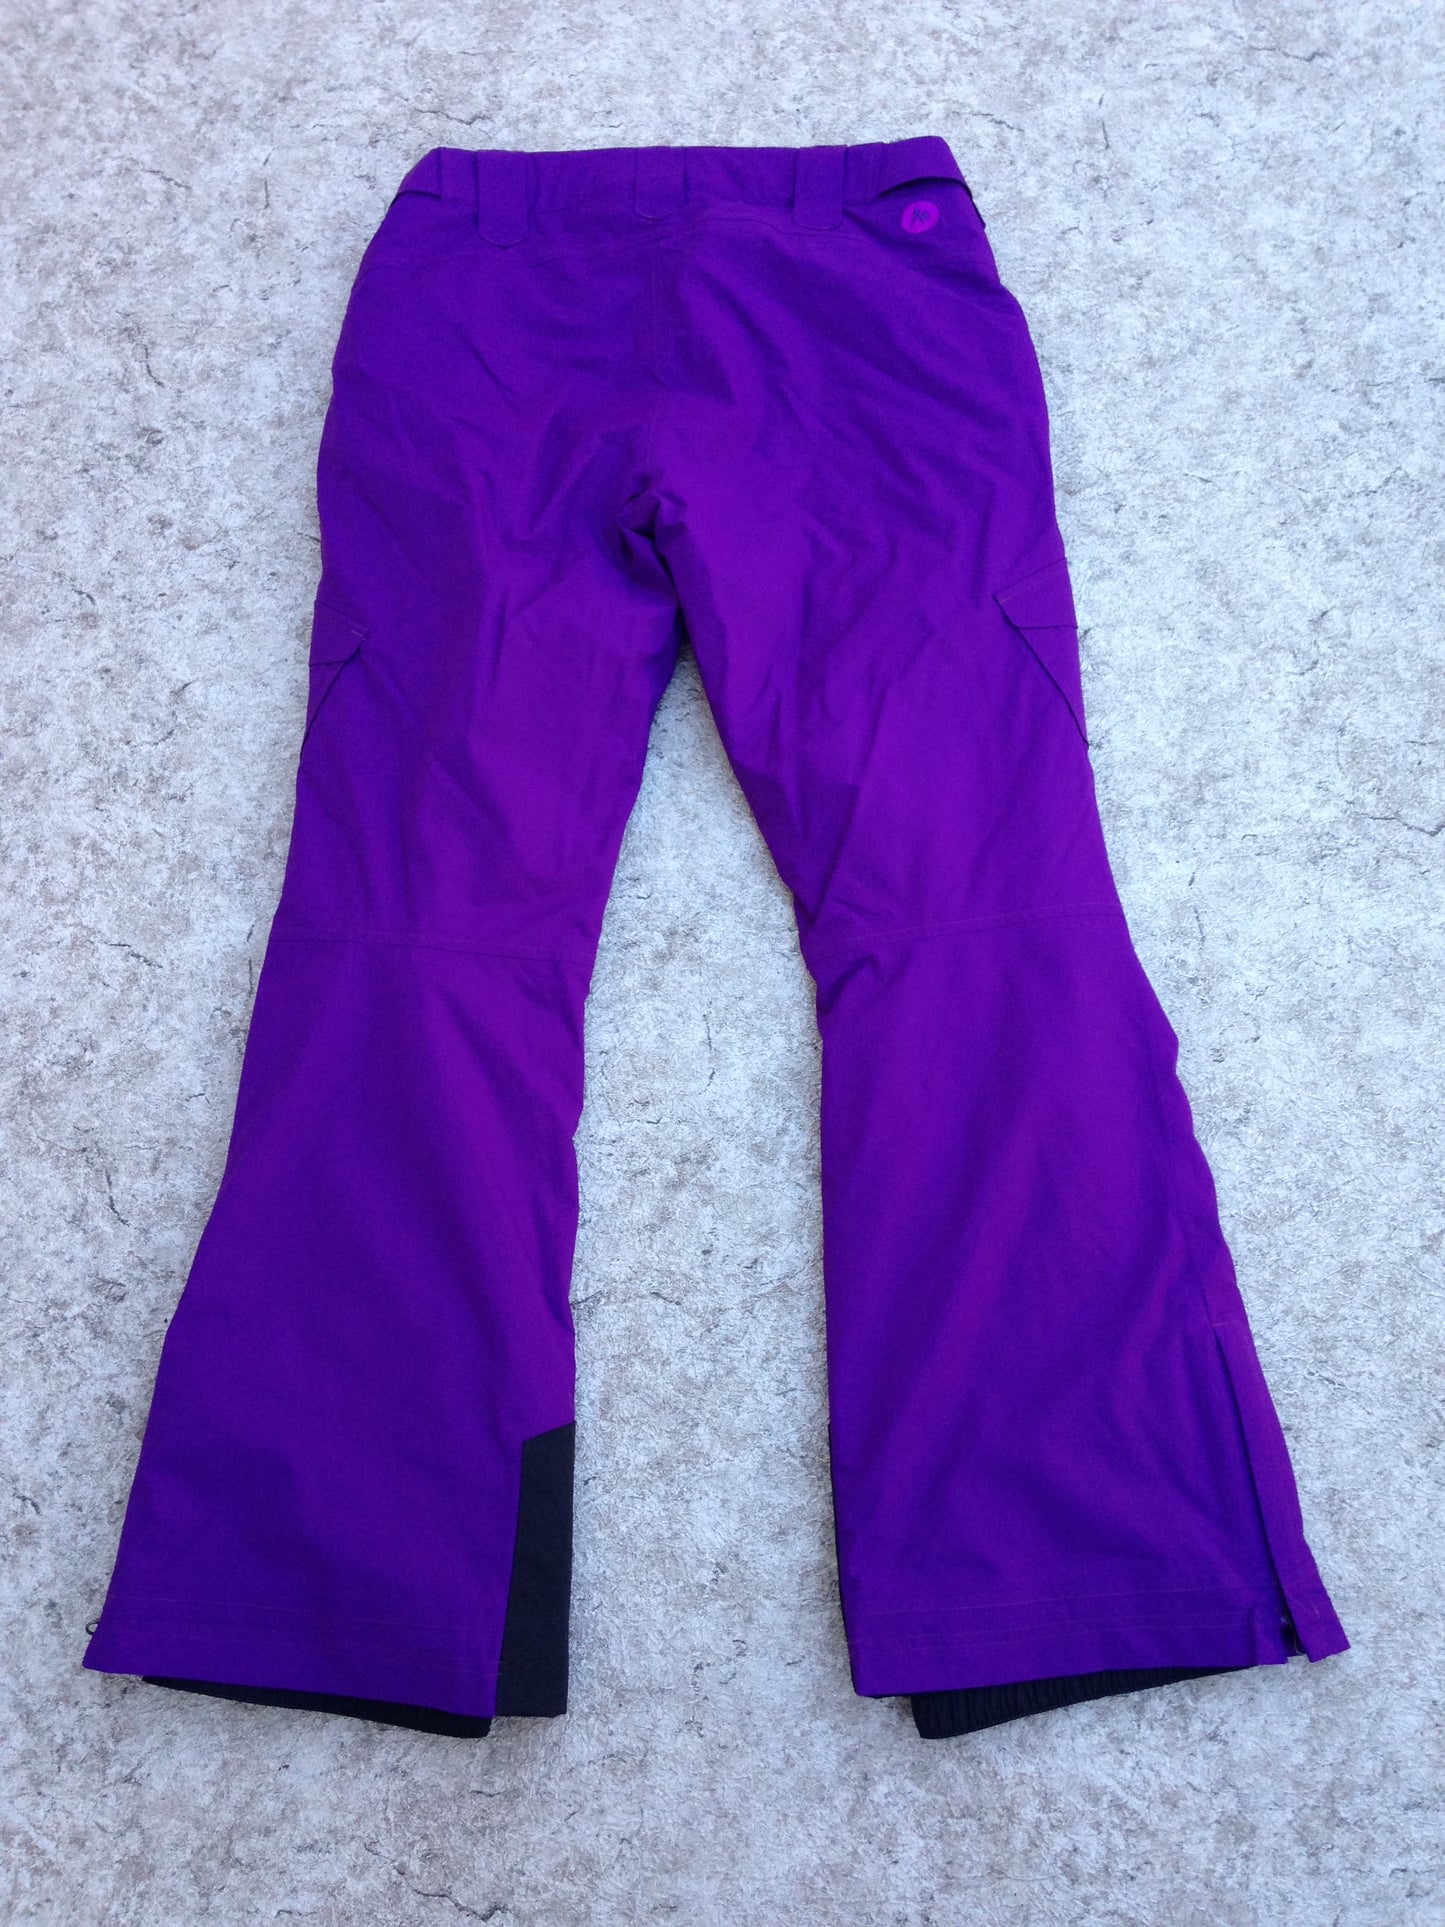 Snow Pants Ladies Small Marmot Outstanding Quality Purple Snowboarding Adjustable Waist New Demo Model